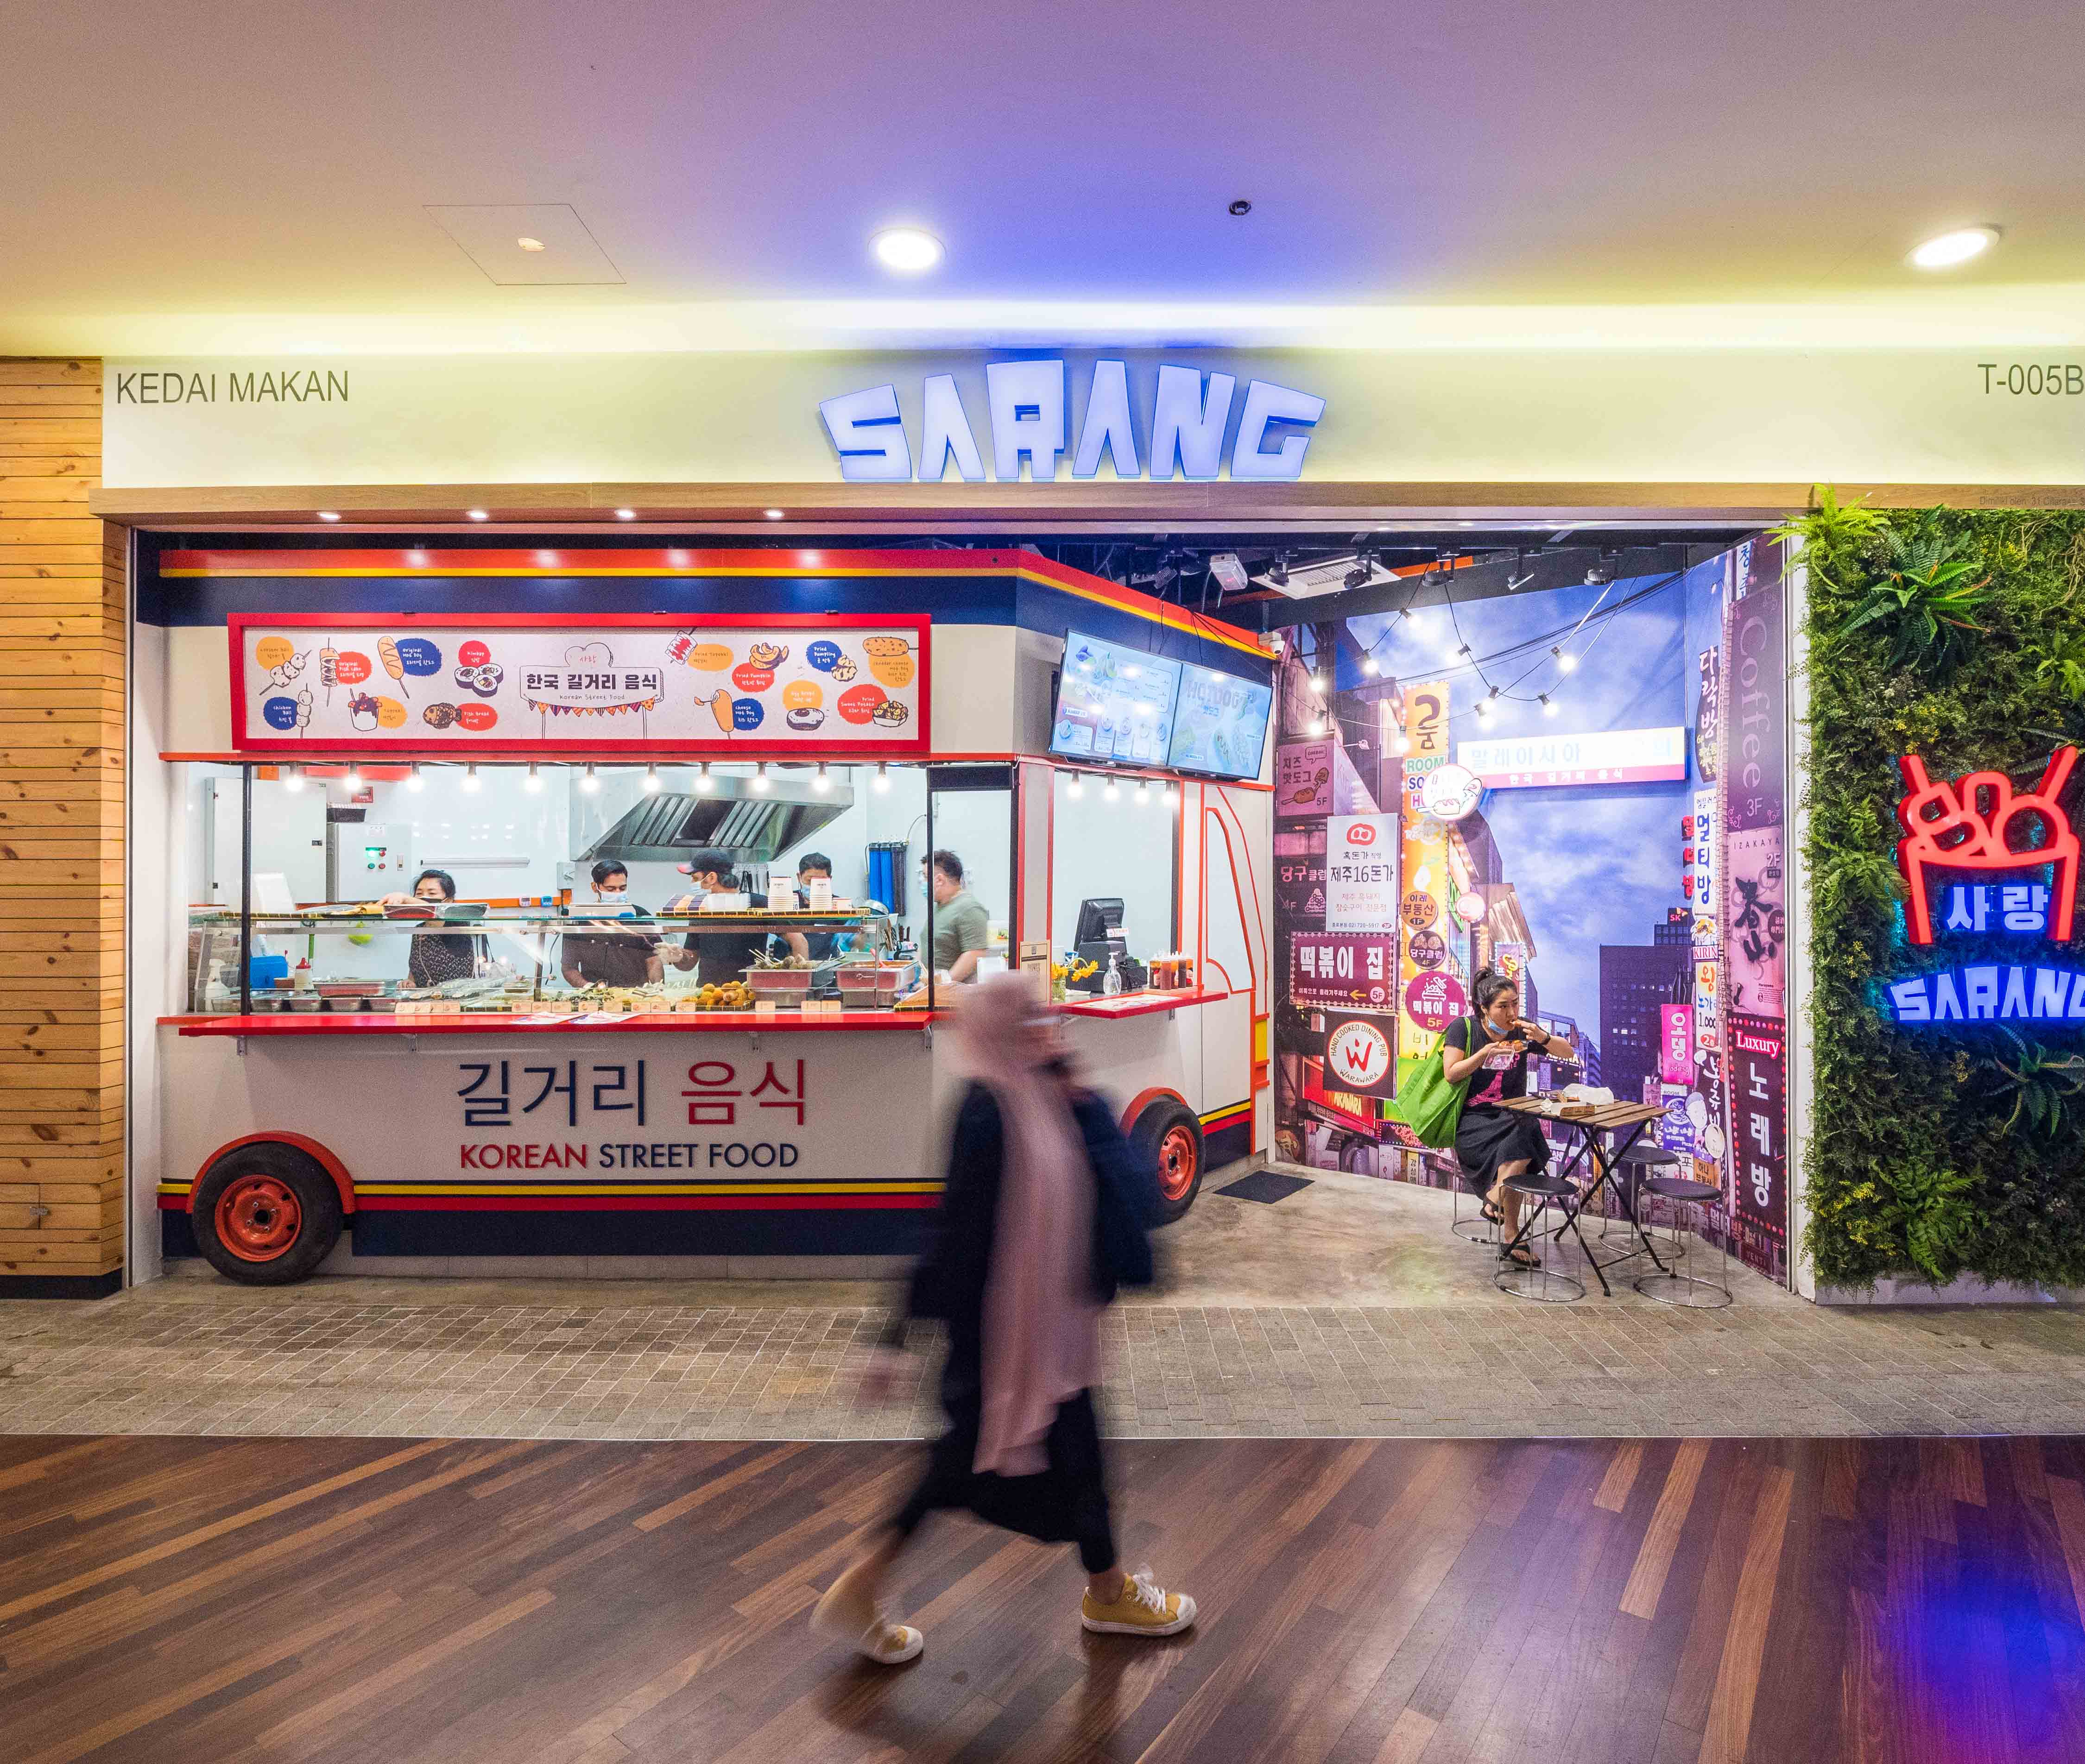 Sarang korean street food